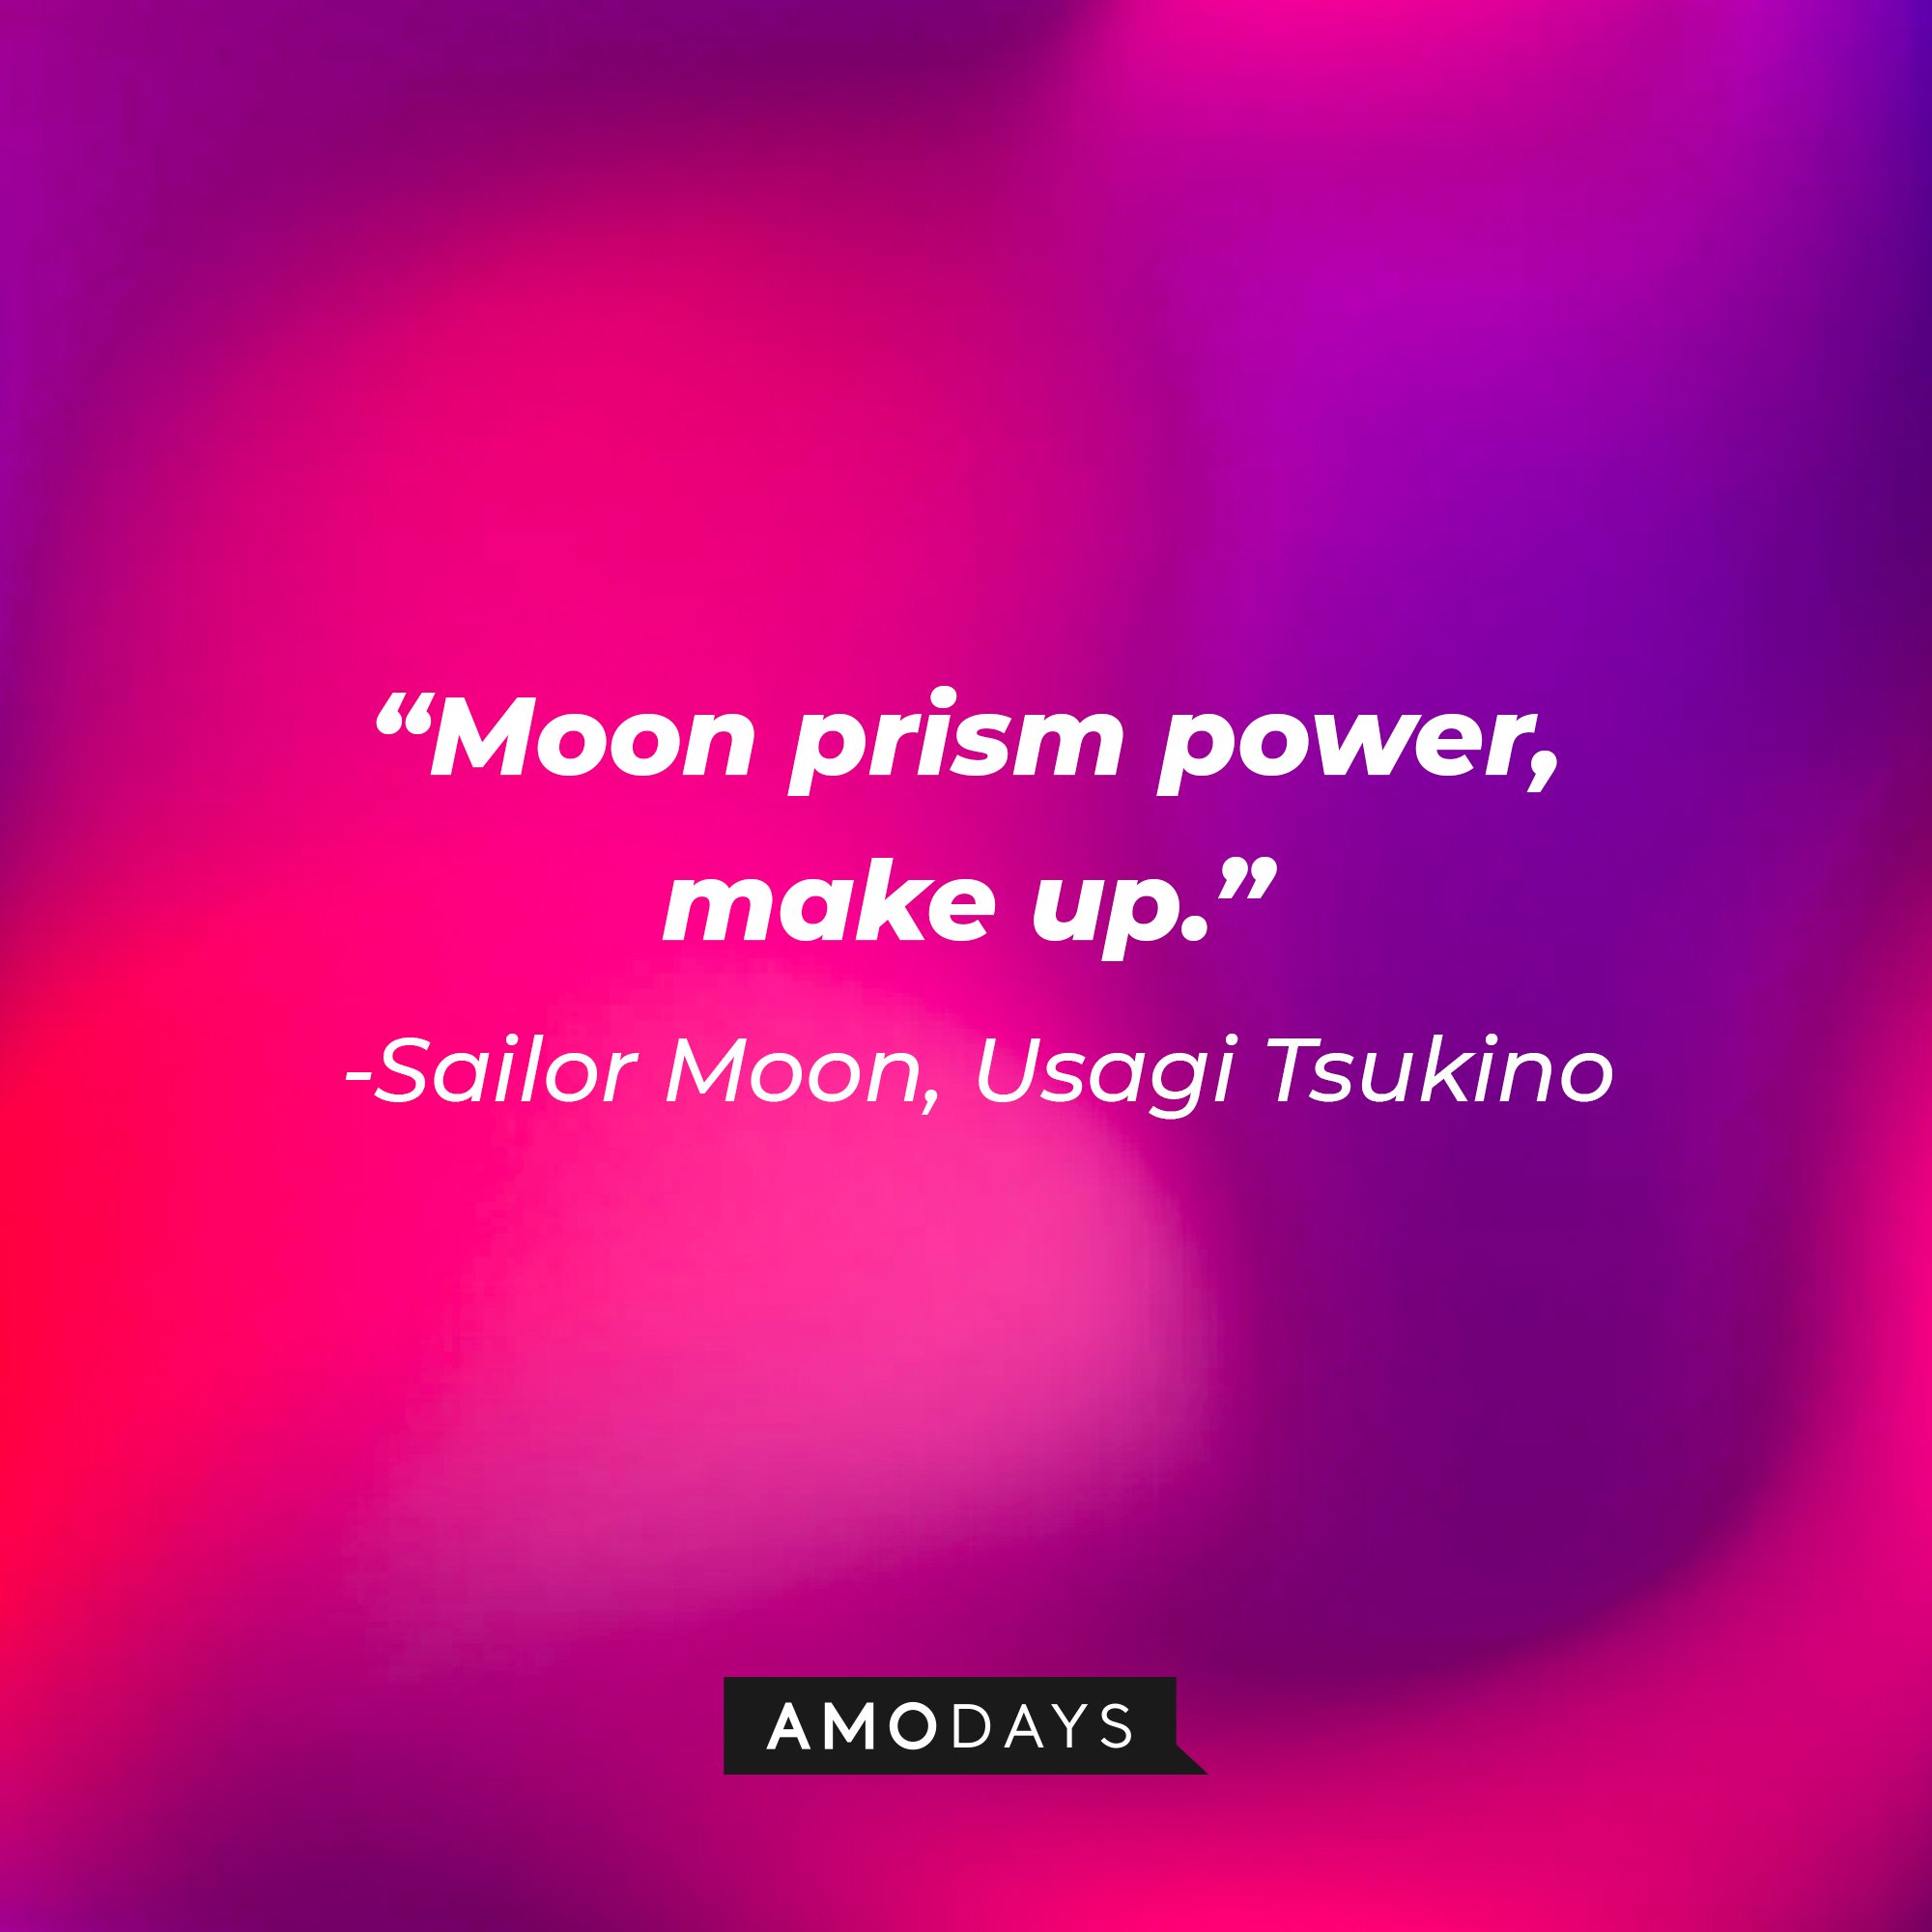 Sailor Moon/Usagi Tsukino’s quote: “Moon prism power, make up.” | Image: AmoDays